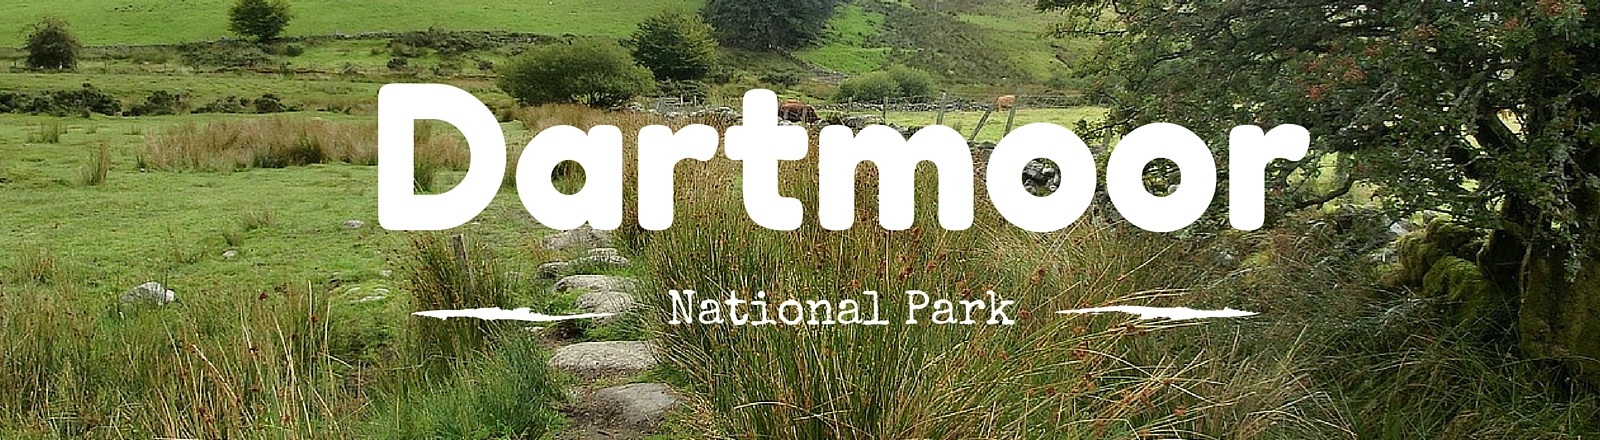 Dartmoor National Park | National Parks Guy